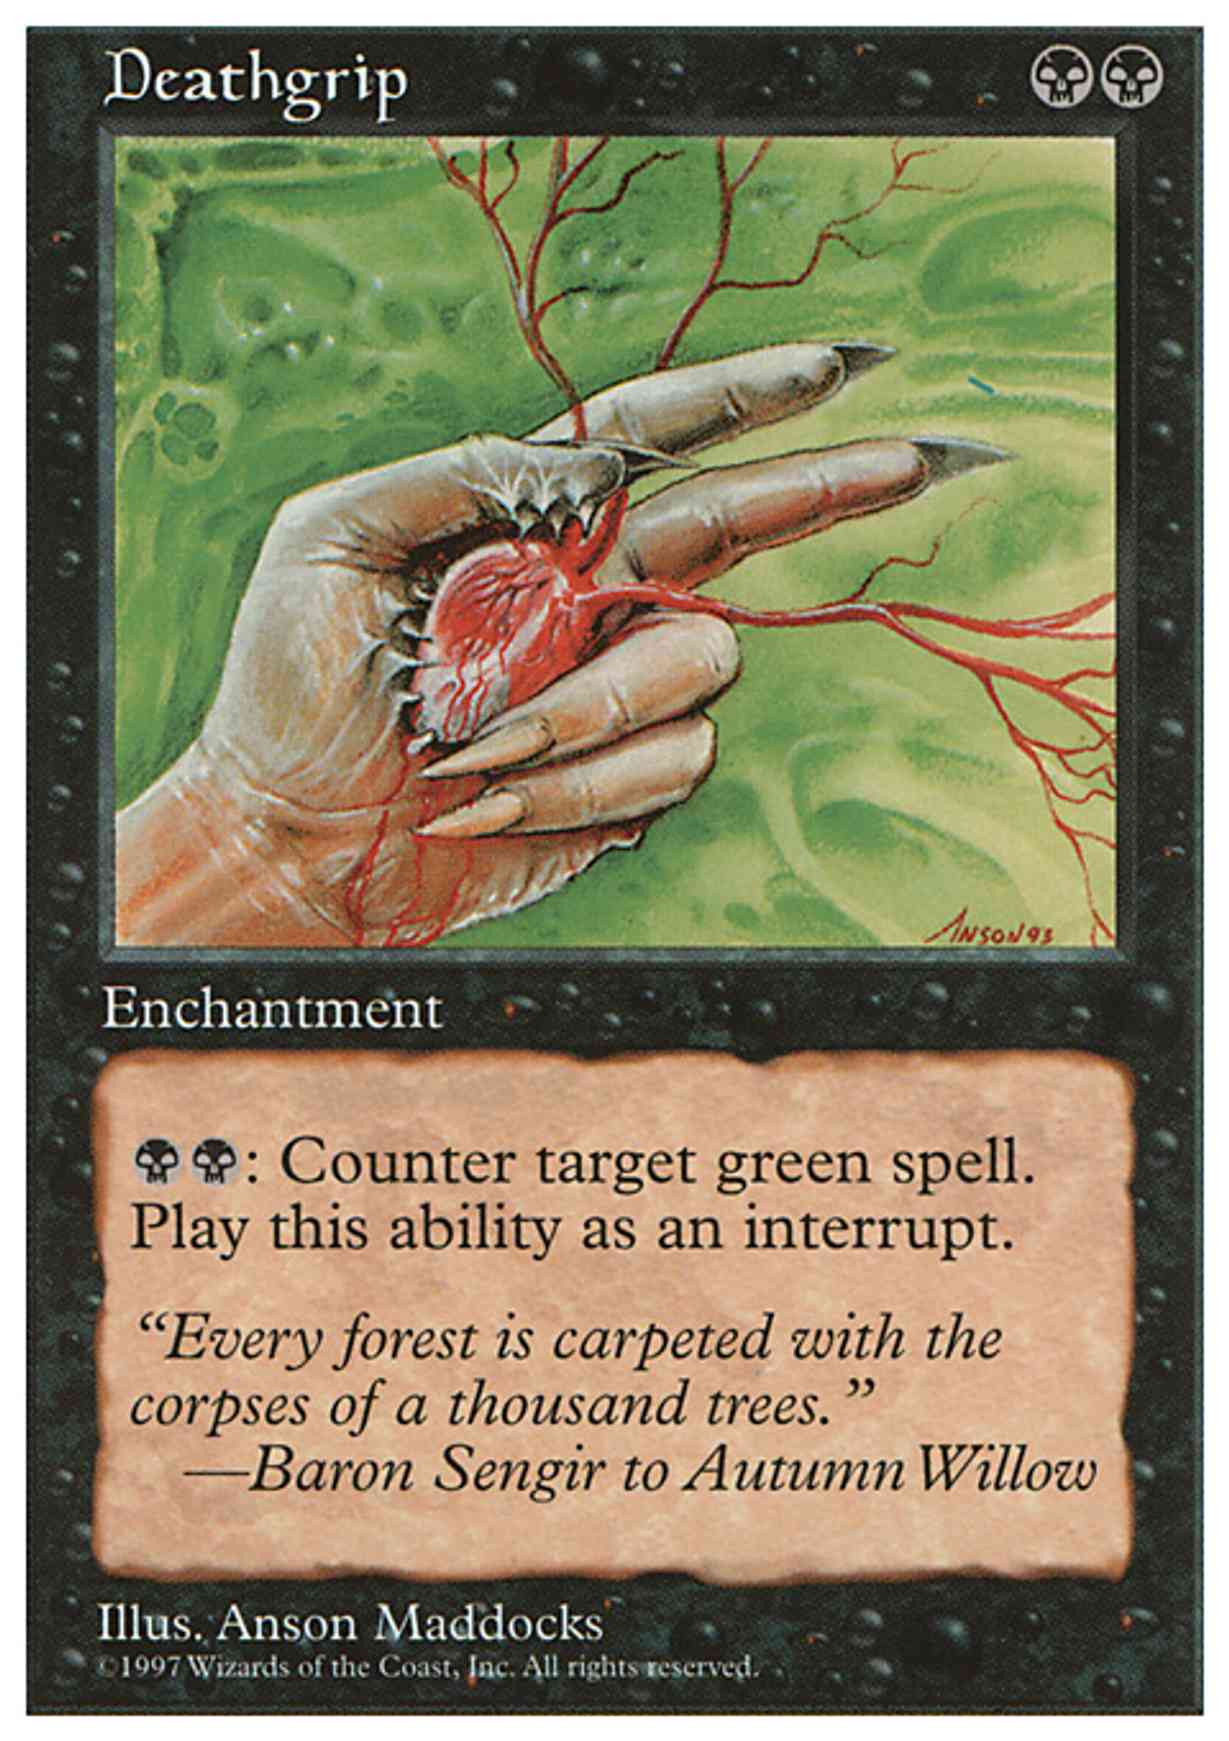 Deathgrip magic card front